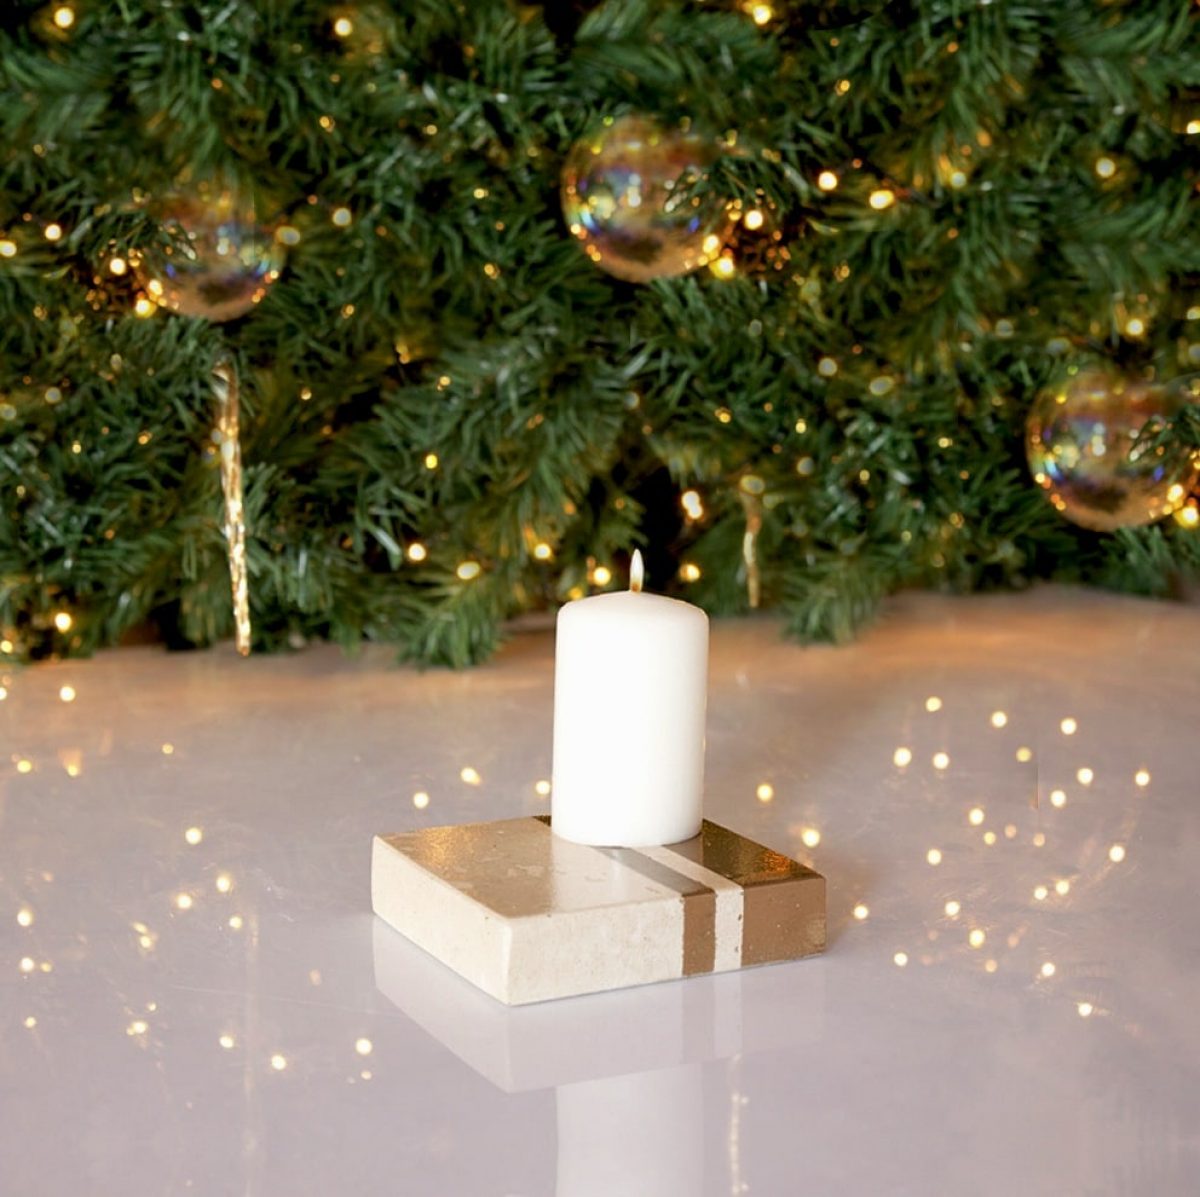 Portacandele di Natale perfetto tealight candele in pietra leccese